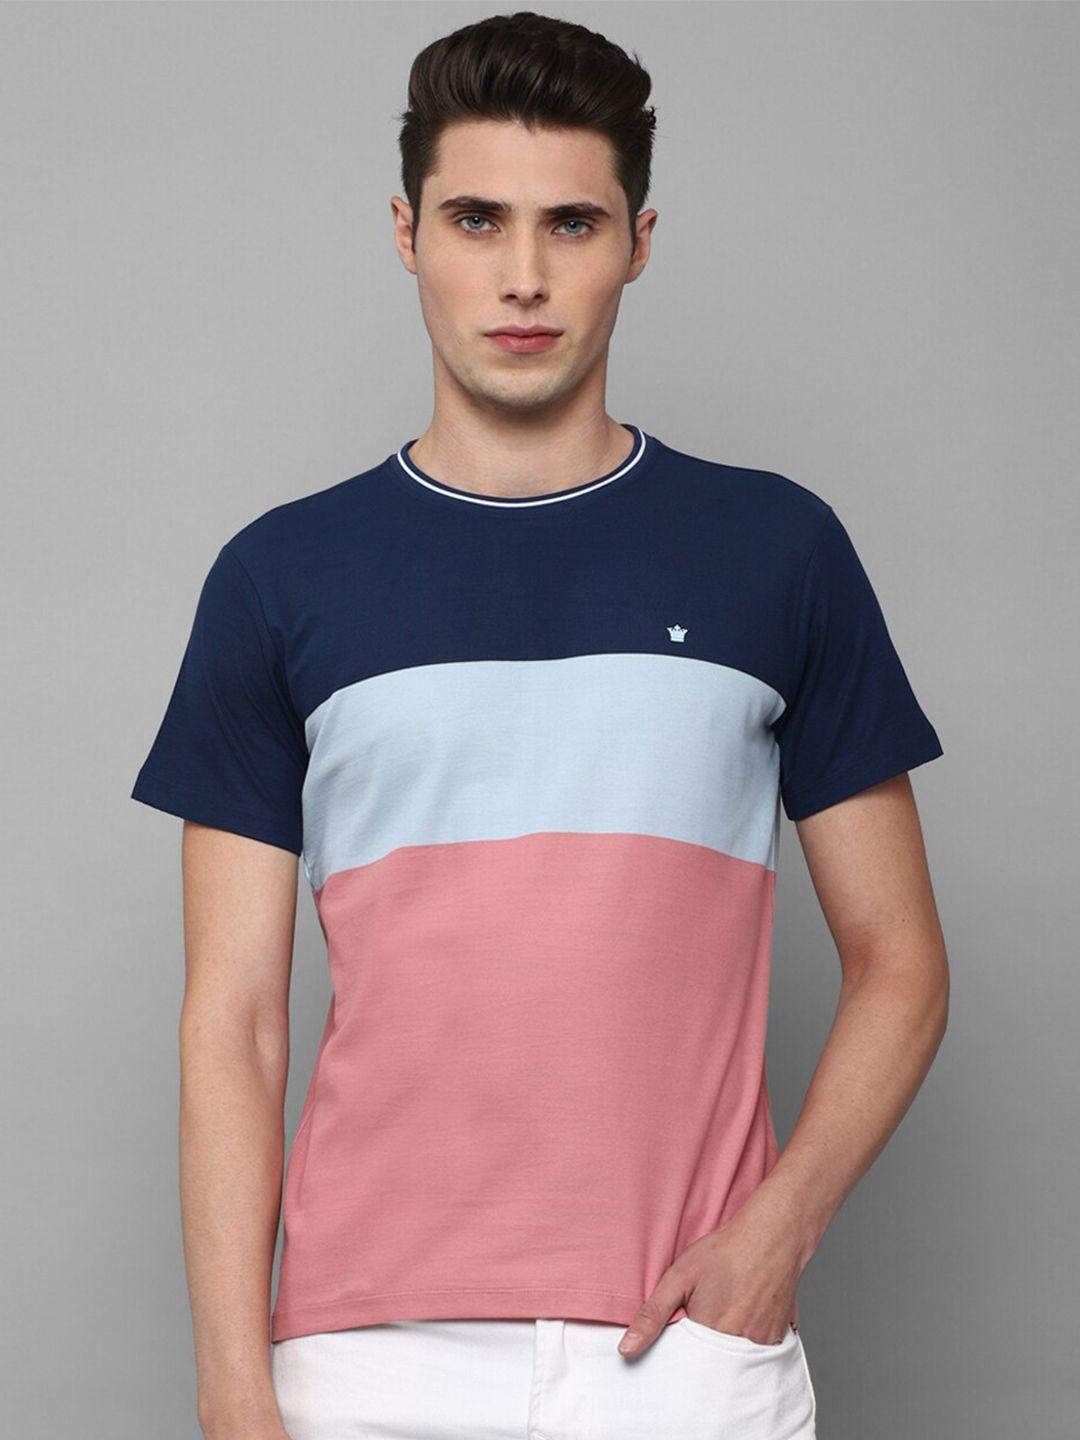 louis philippe sport men multicoloured colourblocked slim fit t-shirt